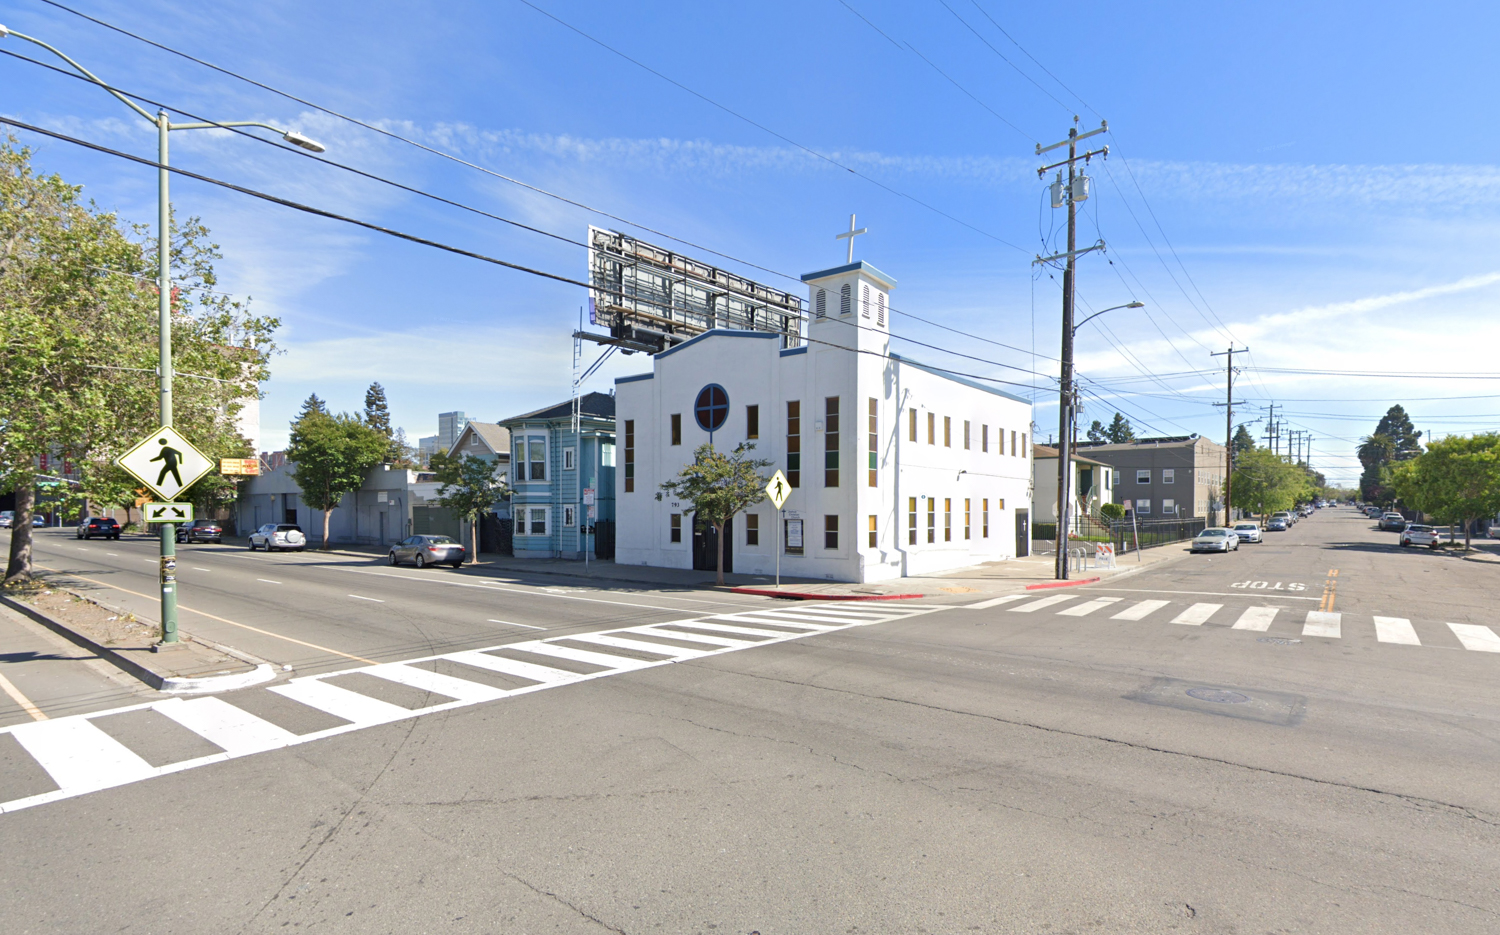 793 West Grand Avenue, image via Google Street View